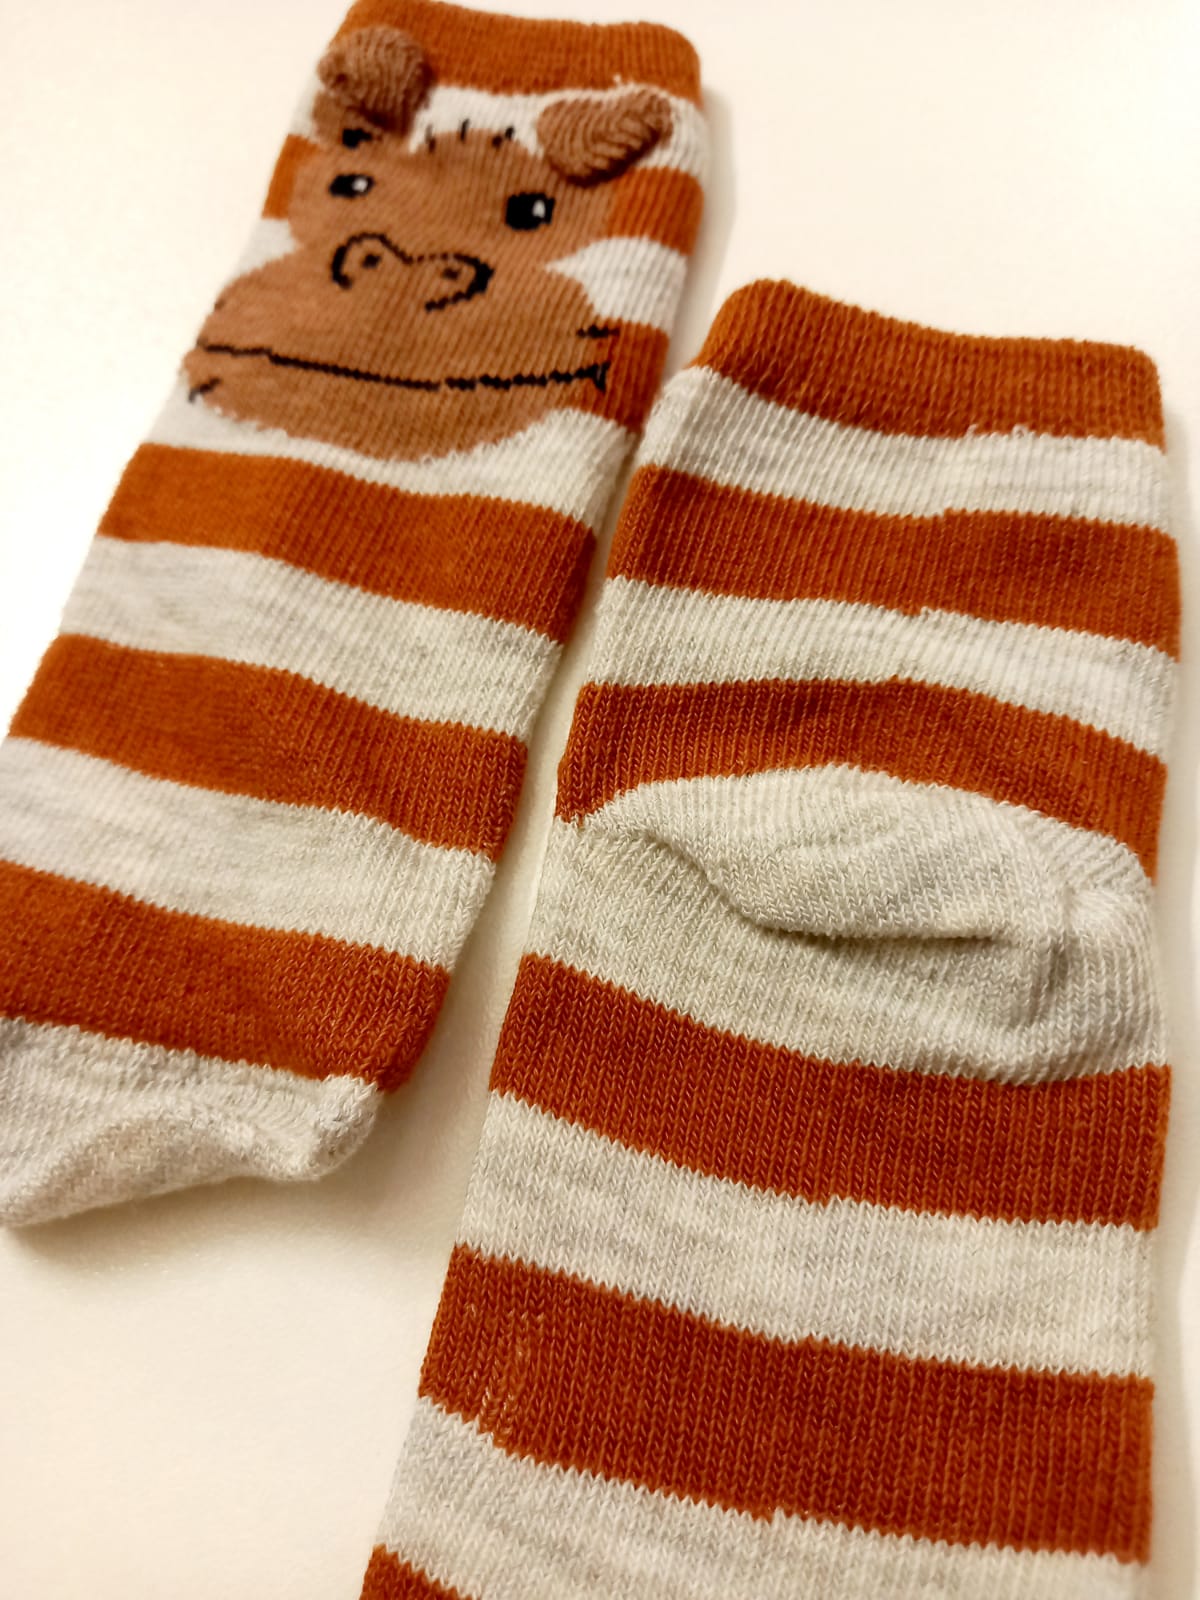 Monkey Themed Socks